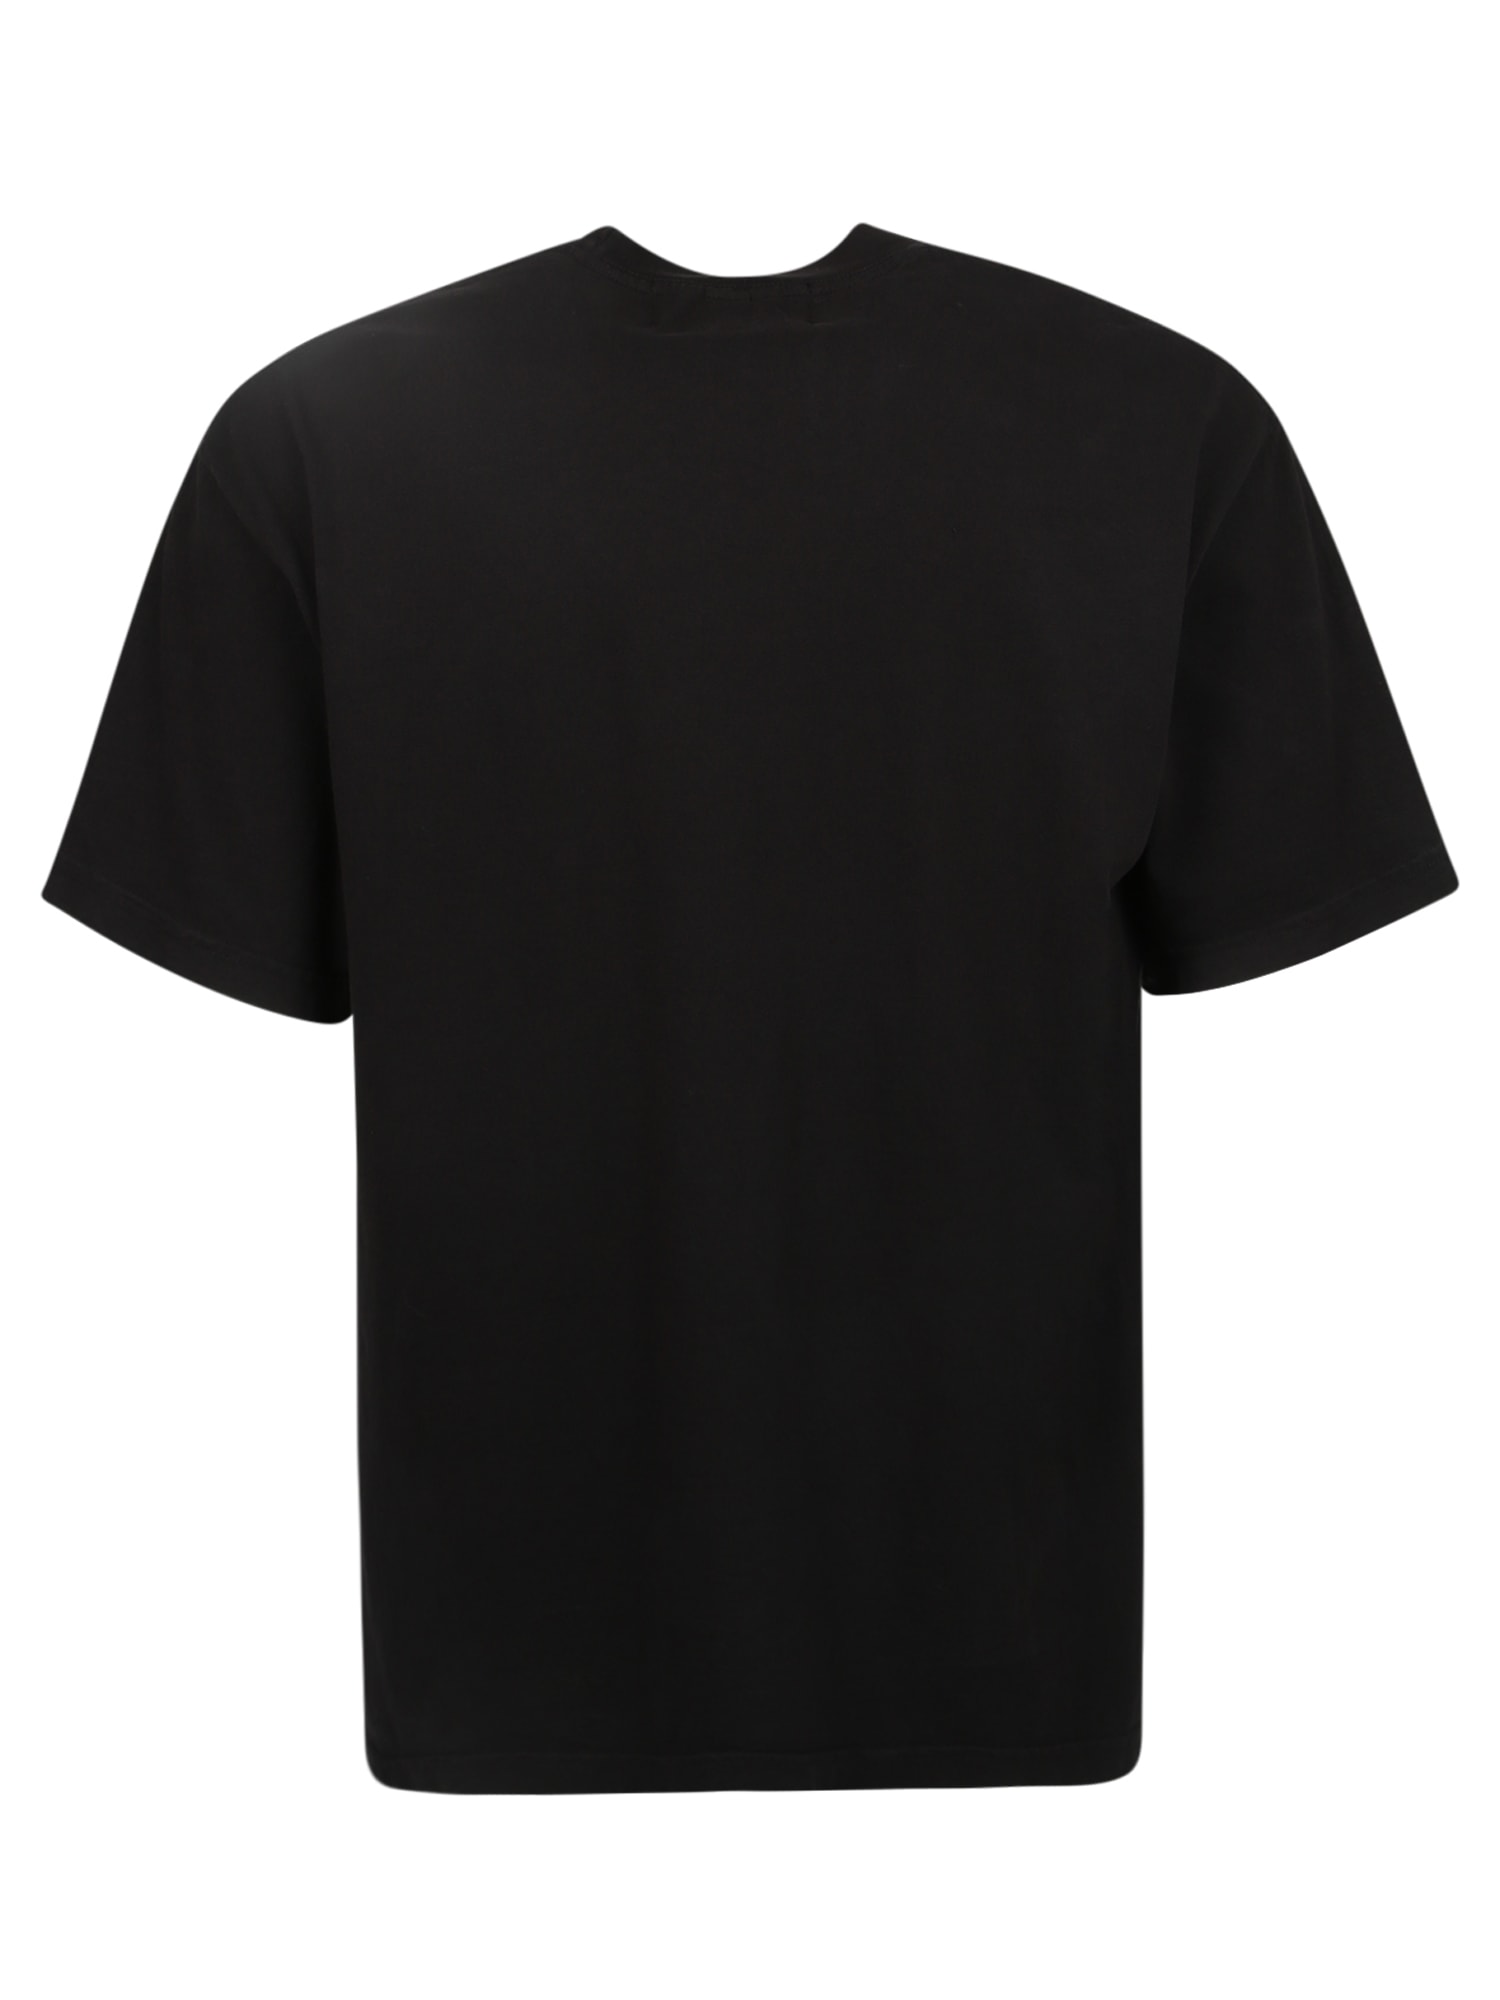 Shop Domrebel Logo-print T-shirt In Black